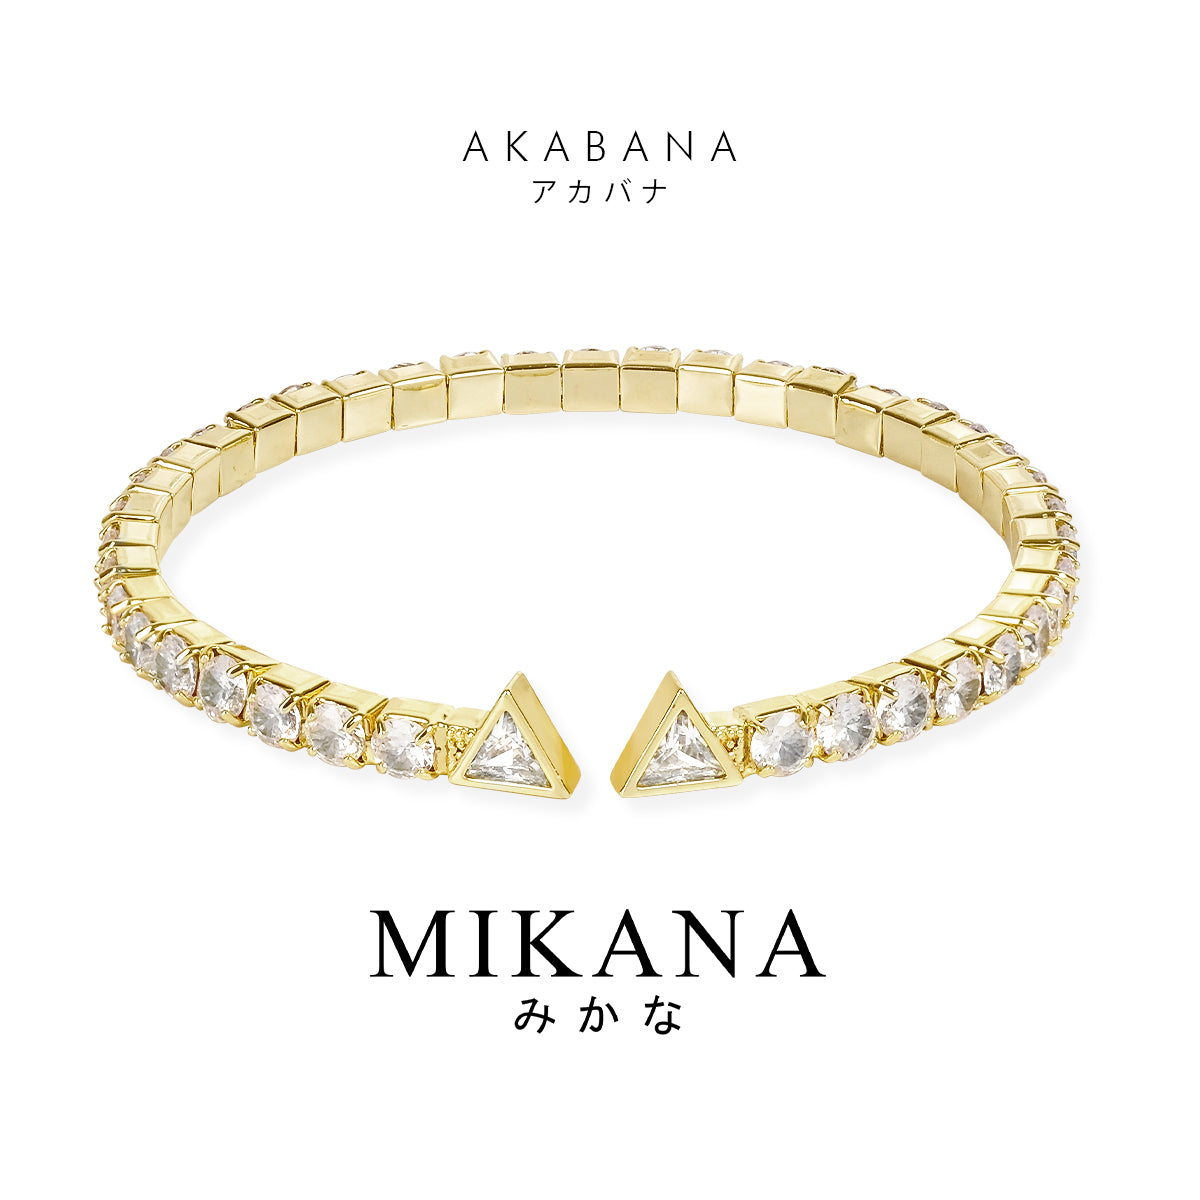 Signature Akabana Adjustable Bangle Bracelet